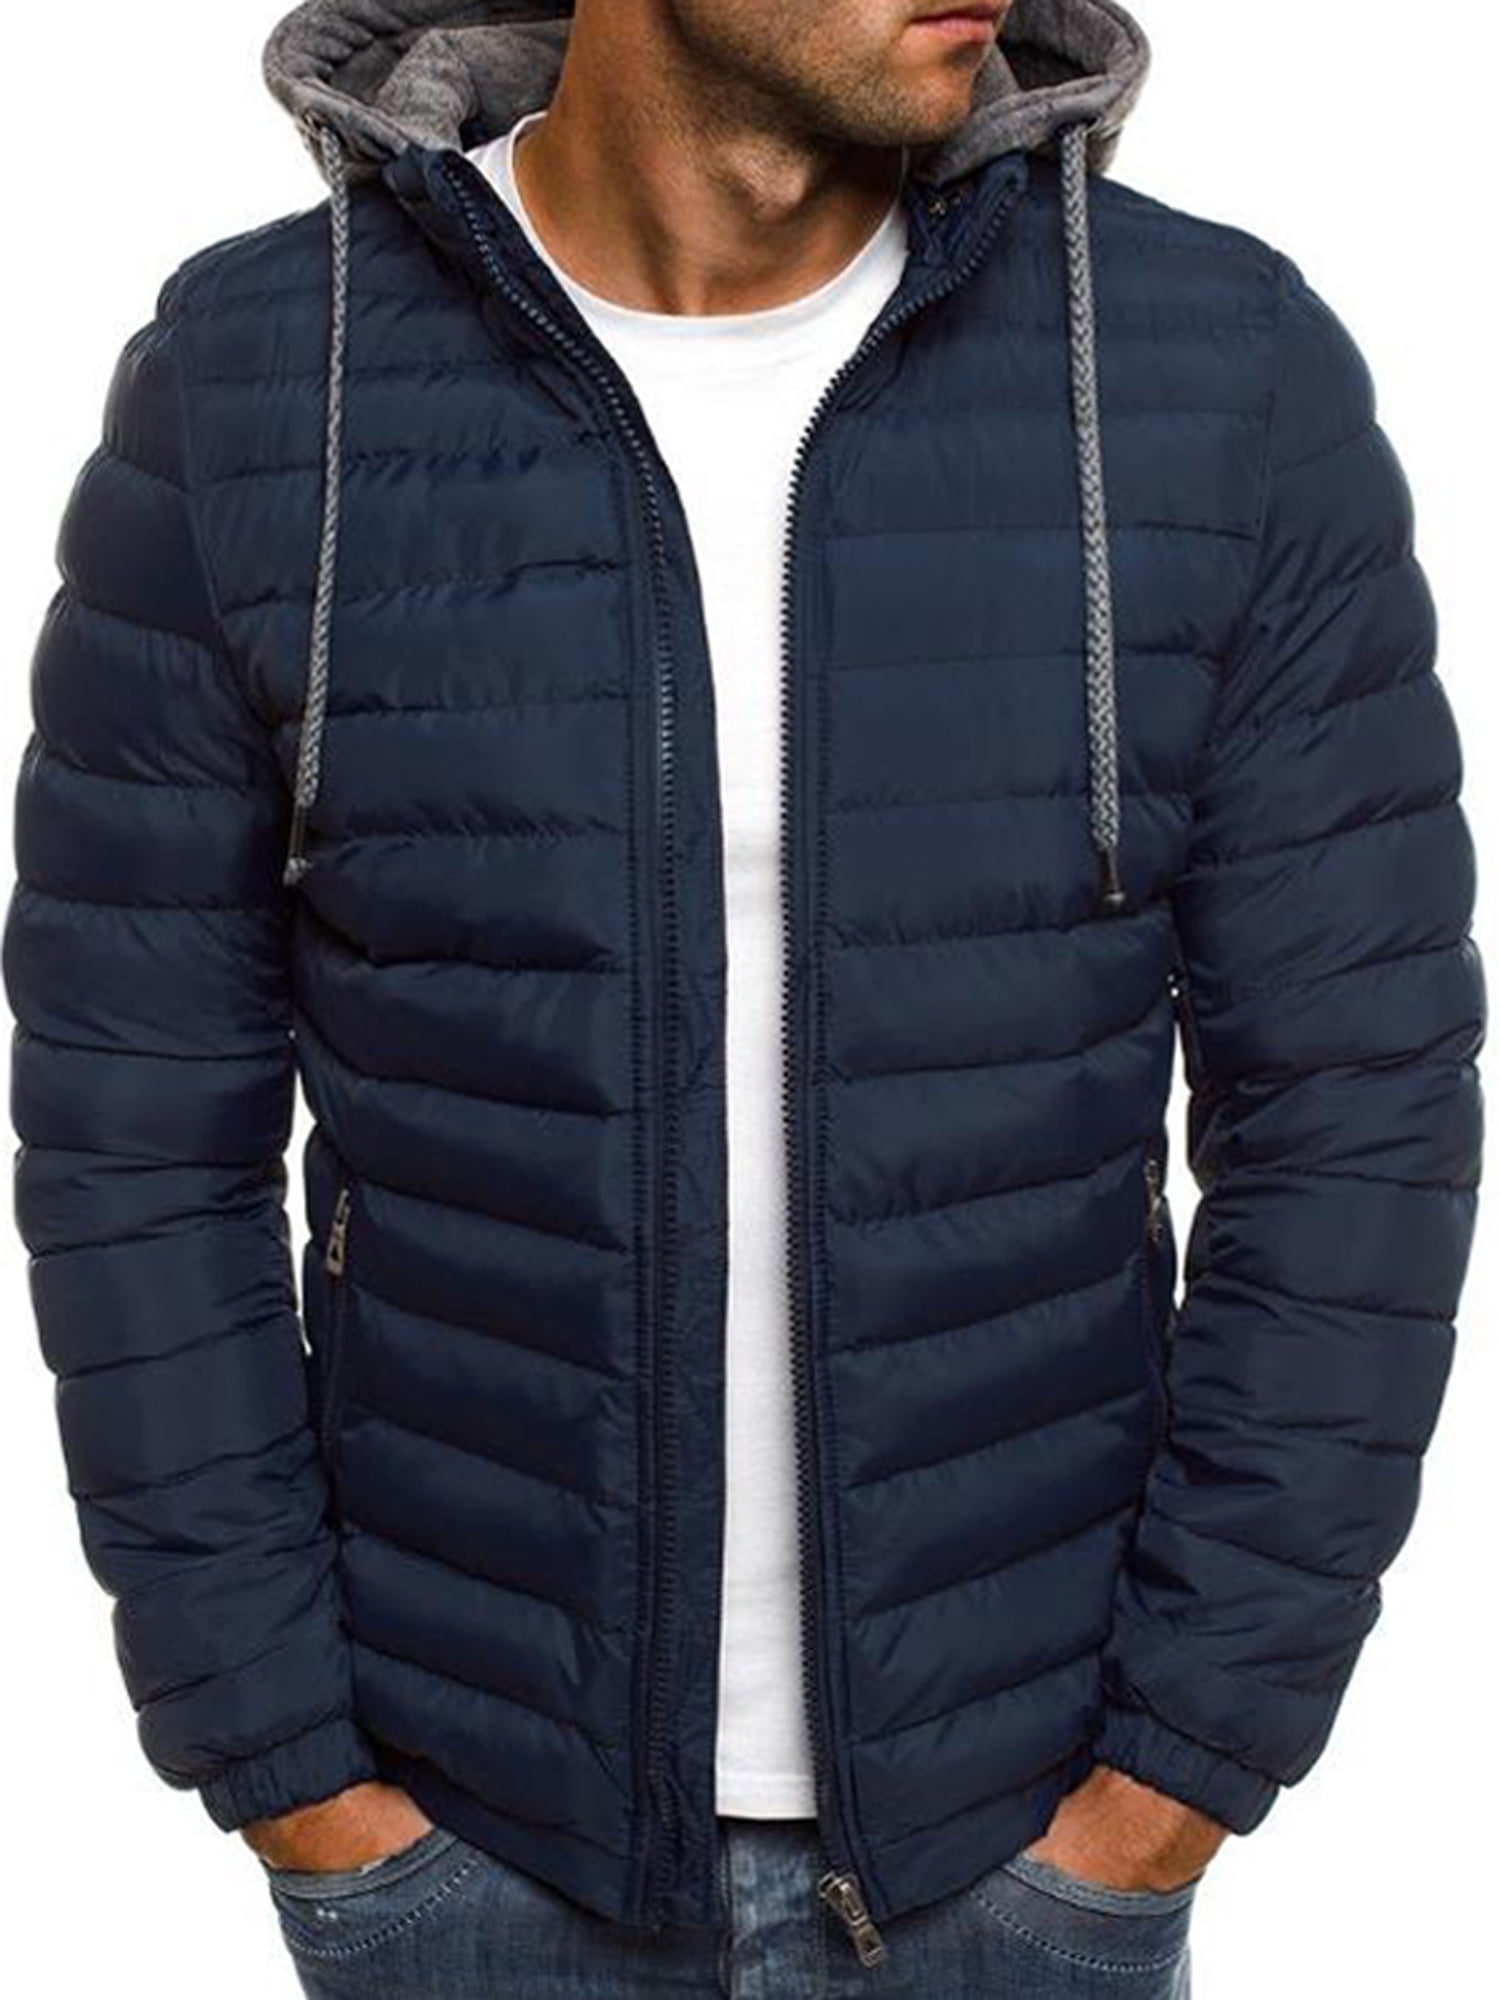 Men's Hooded Puffer Jackets Coats Winter Warm Zipper Casual Padded Outerwear